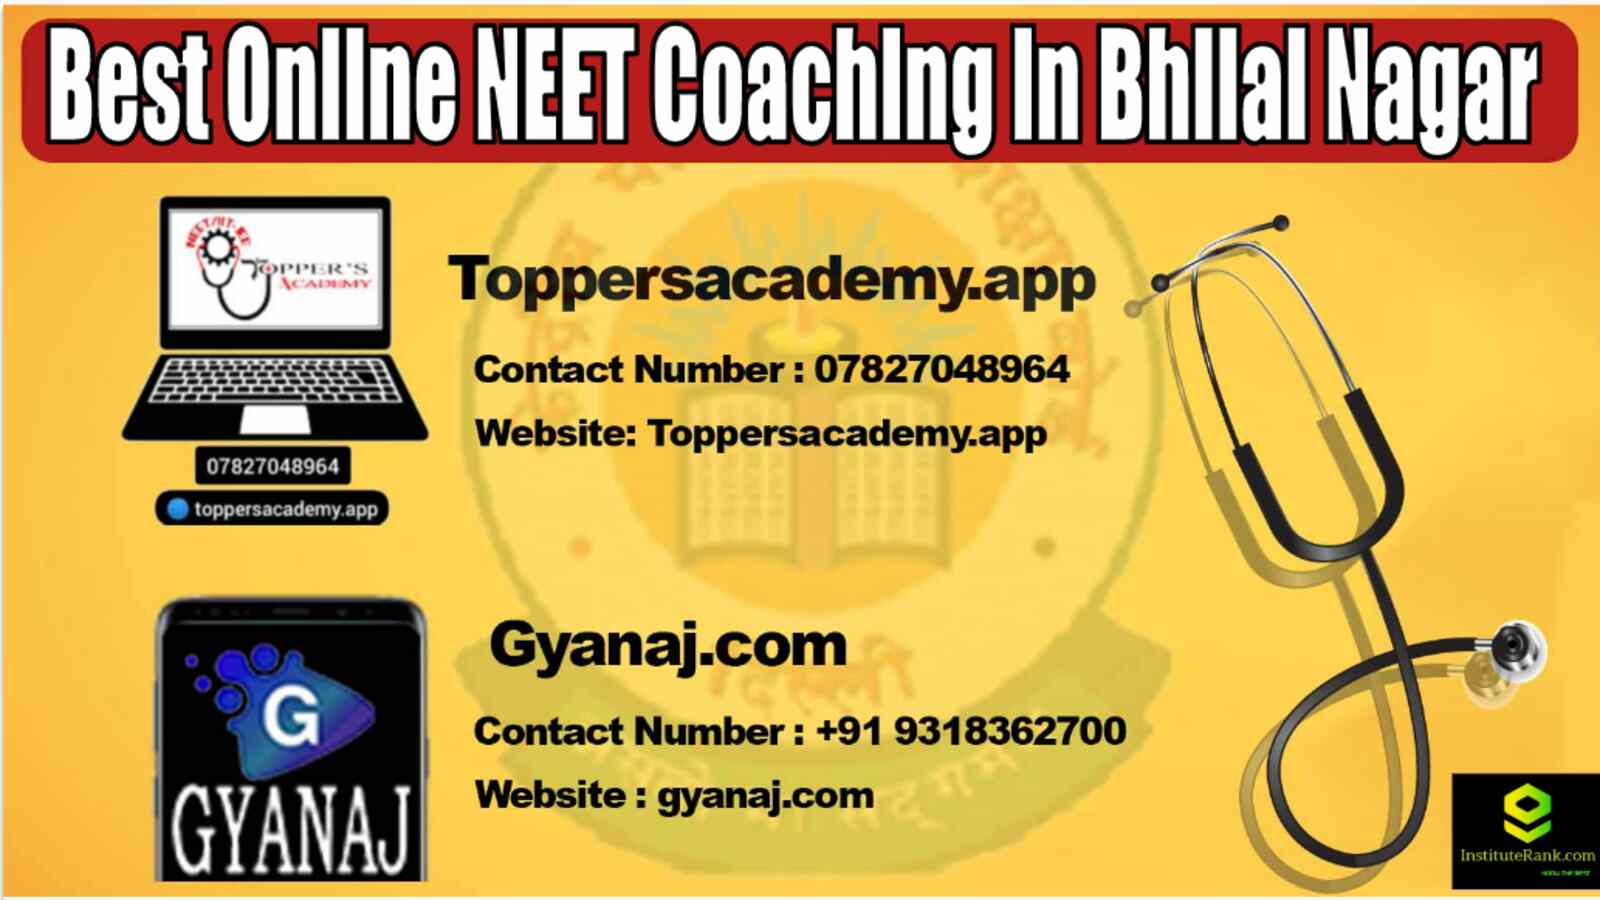 Best Online NEET Coaching in Bhilai Nagar 2022